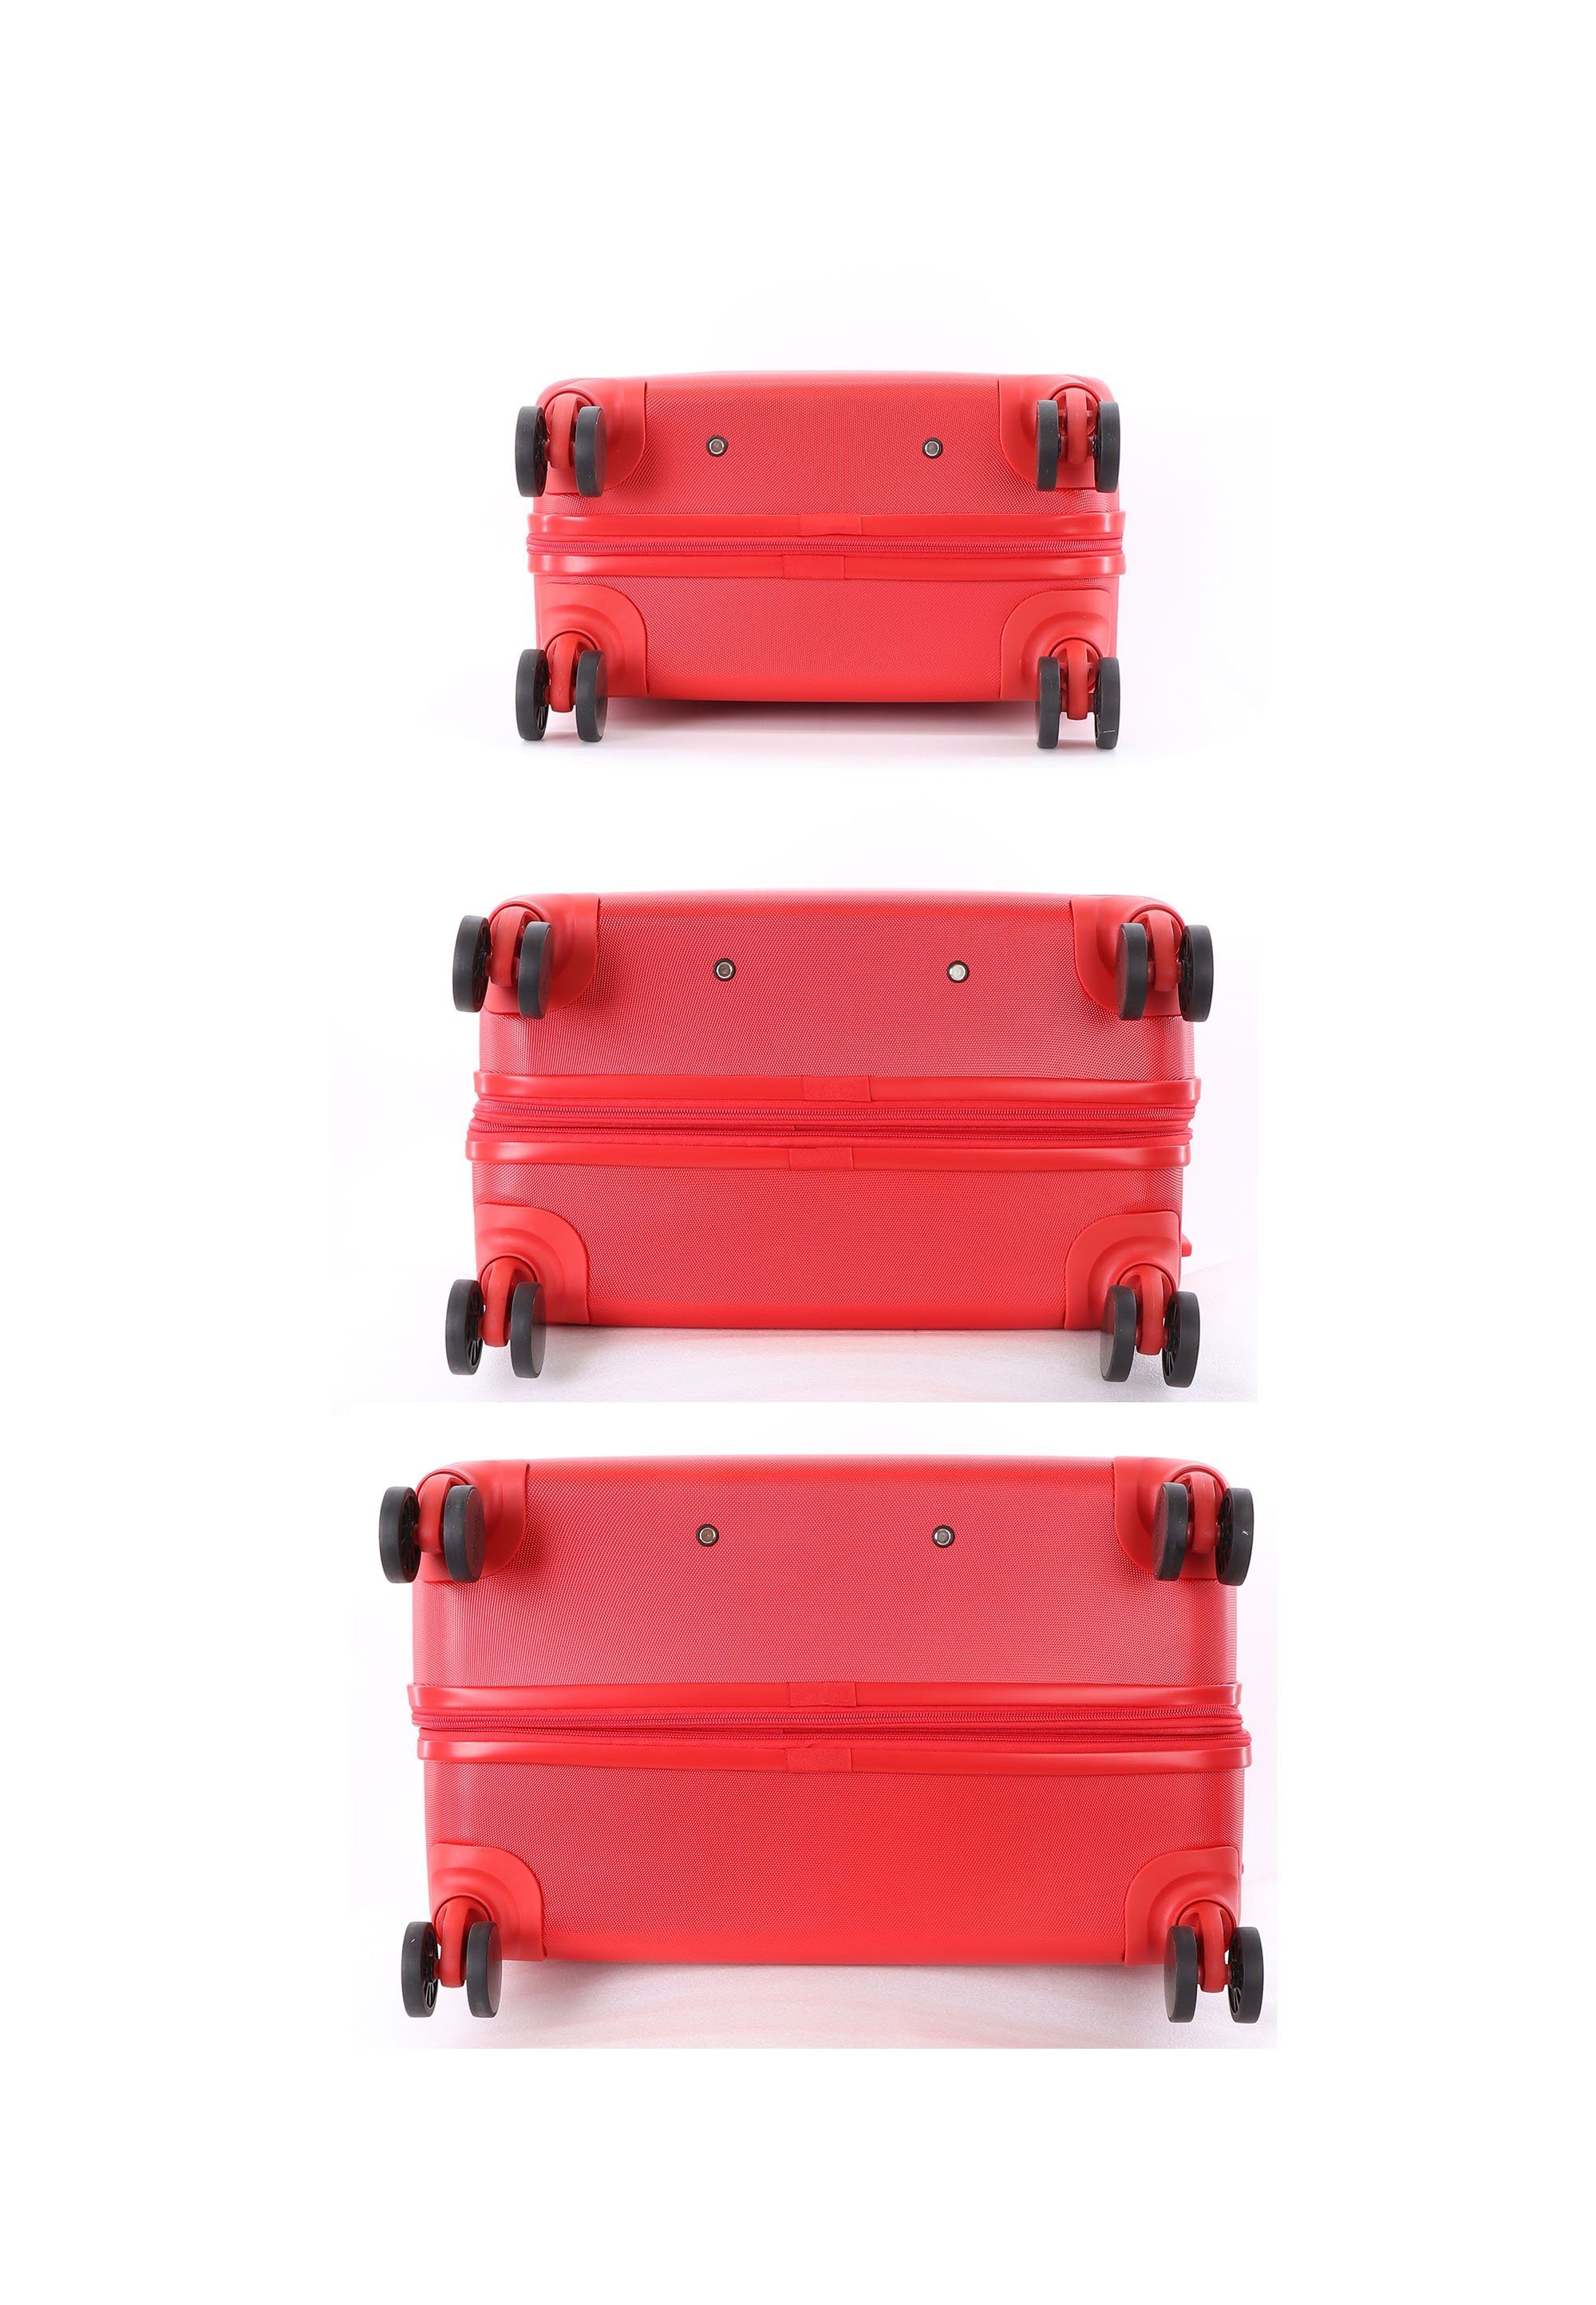 NATIONAL GEOGRAPHIC Koffer Pulse, hergestellt aus dem ABS-Material